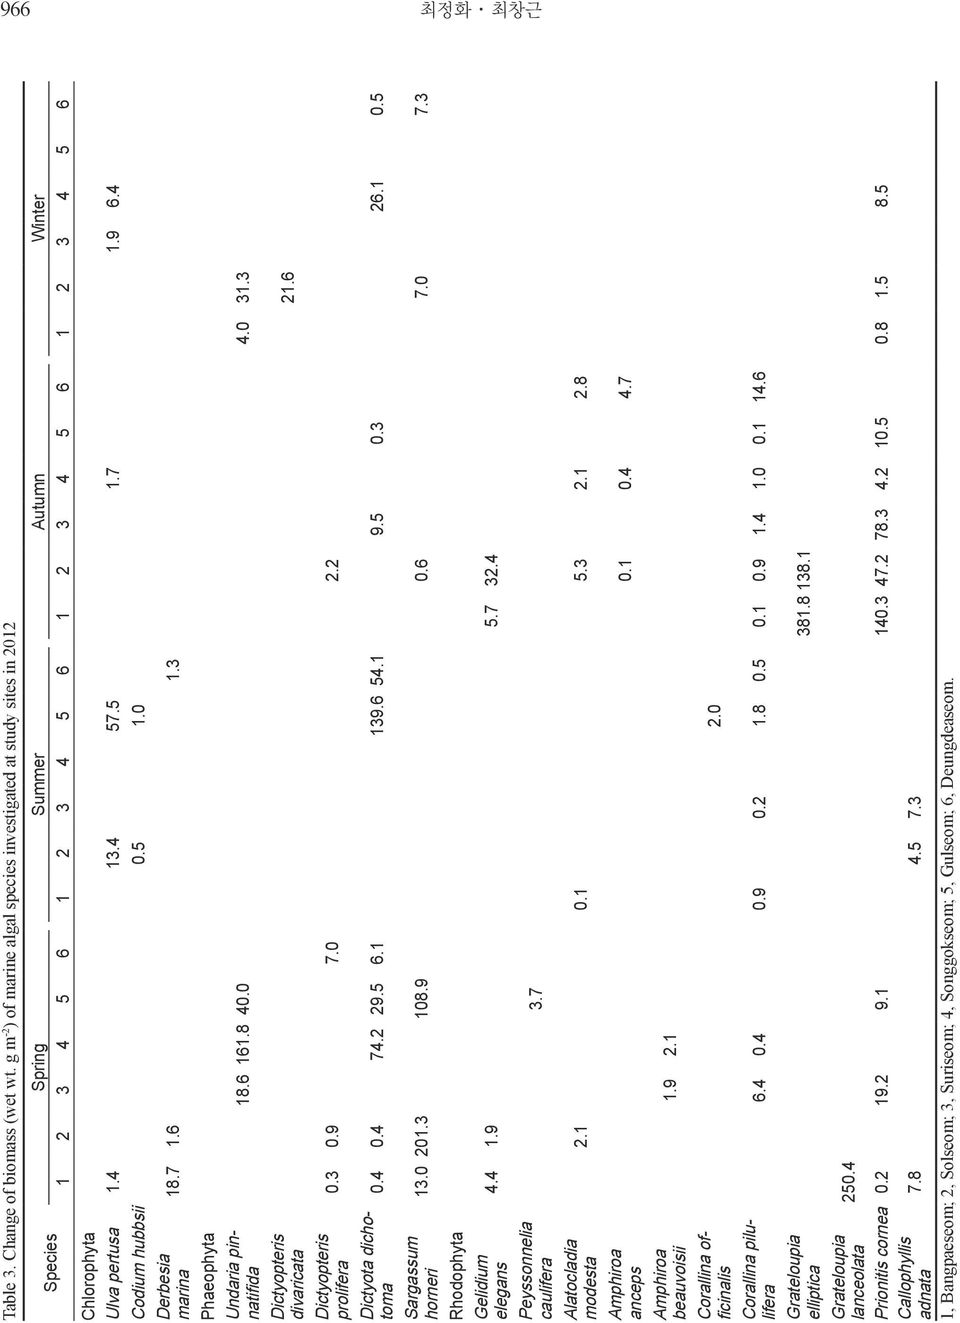 4 Codium hubbsii 0.5 1.0 Derbesia marina 18.7 1.6 1.3 Undaria pinnatifida 18.6 161.8 40.0 4.0 31.3 Dictyopteris divaricata 21.6 Dictyopteris prolifera 0.3 0.9 7.0 2.2 Dictyota dichotoma 0.4 0.4 74.